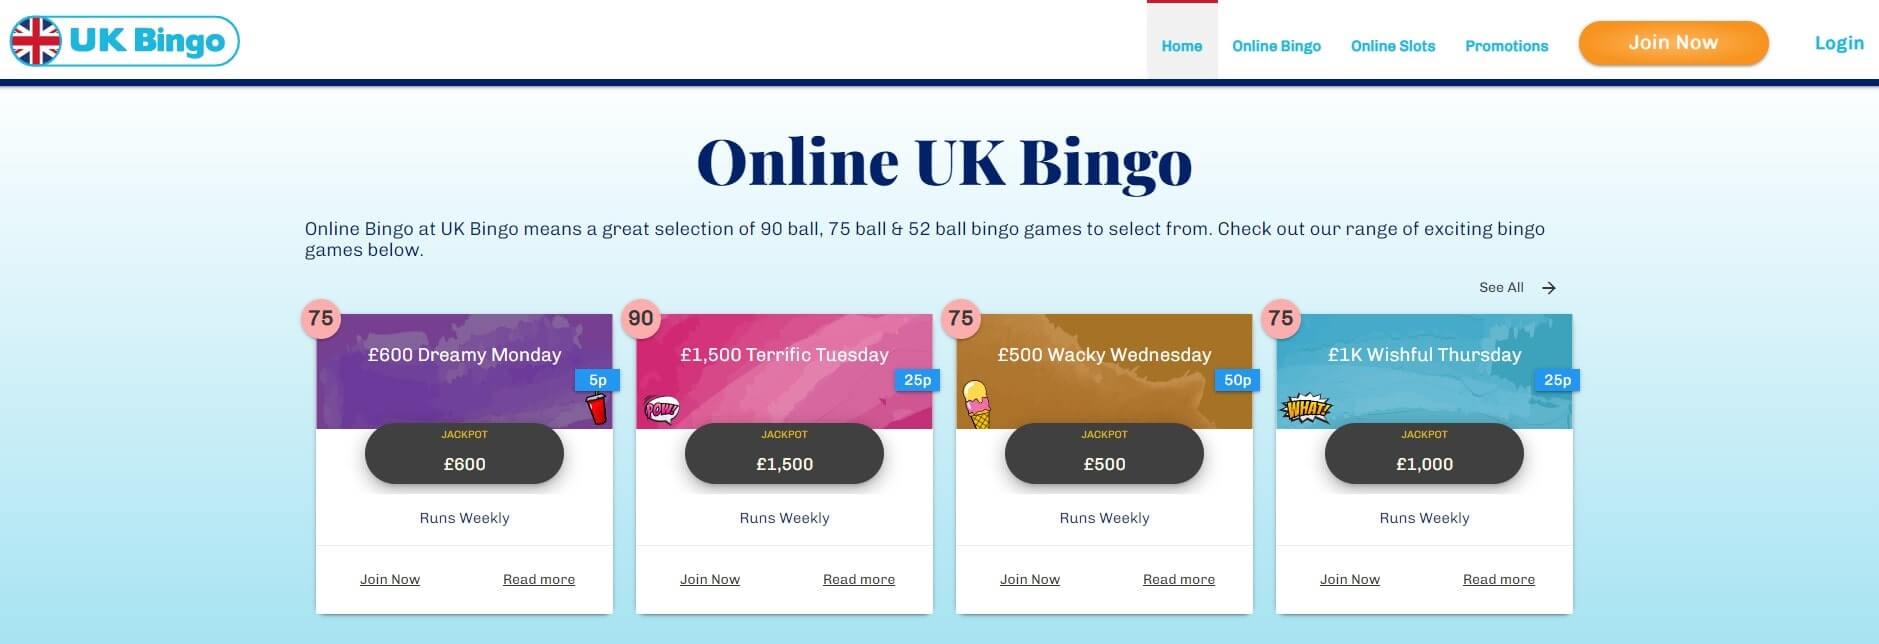 uk bingo review